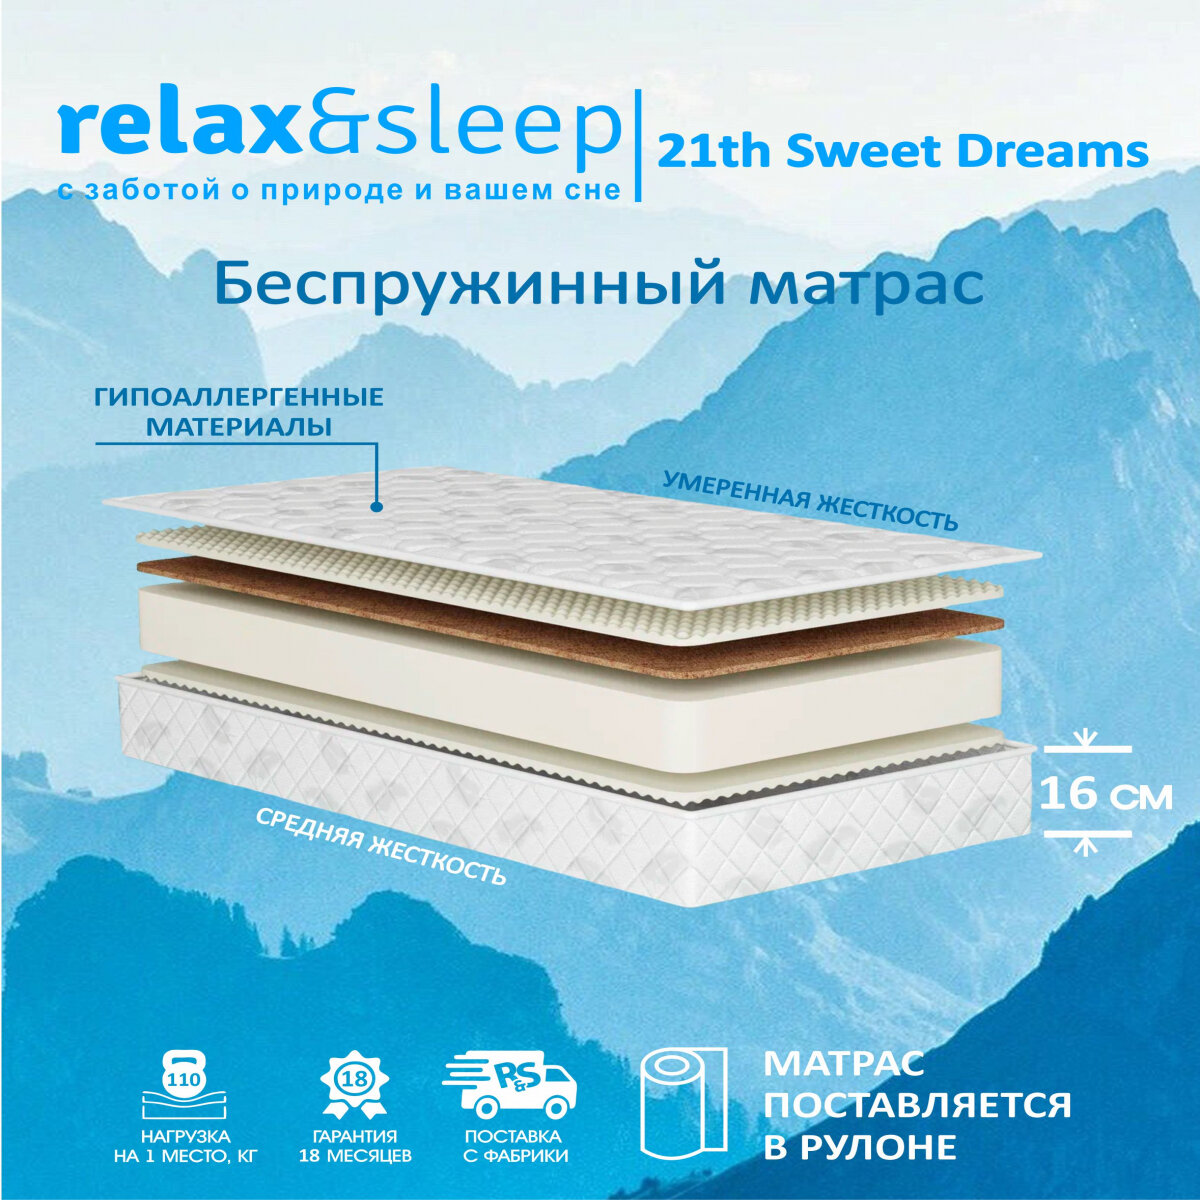 Матрас Relax&Sleep ортопедический беспружинный 21th Sweet Dreams (120 / 190)